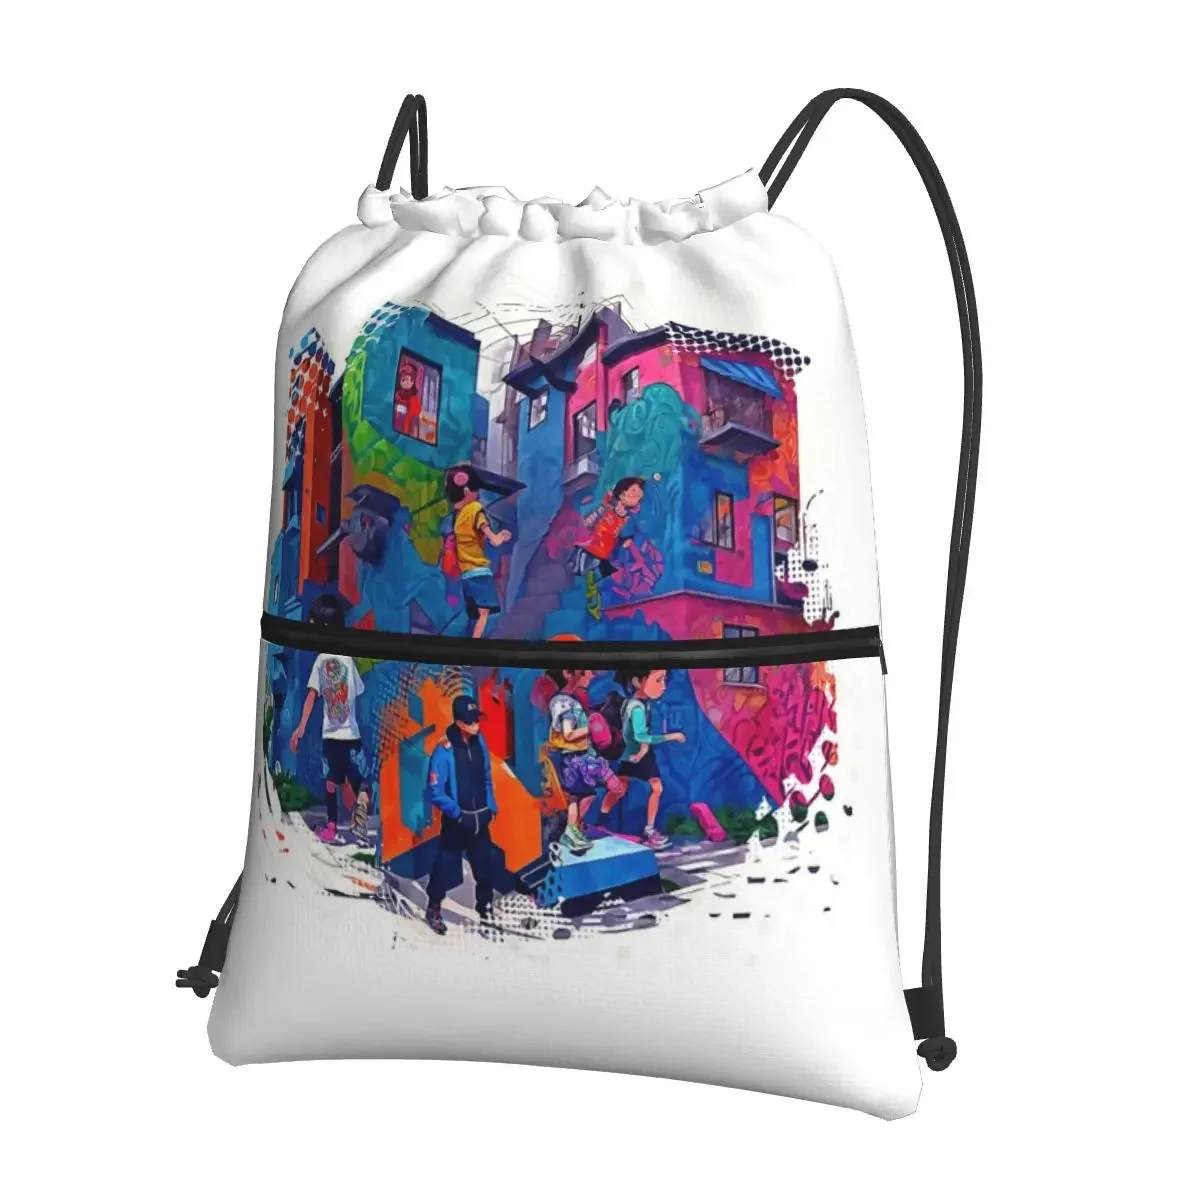 

Don't Talk To Strangers Portable Backpacks Drawstring Bag Fashion Drawstring Bundle Pocket Book Bags For School Students